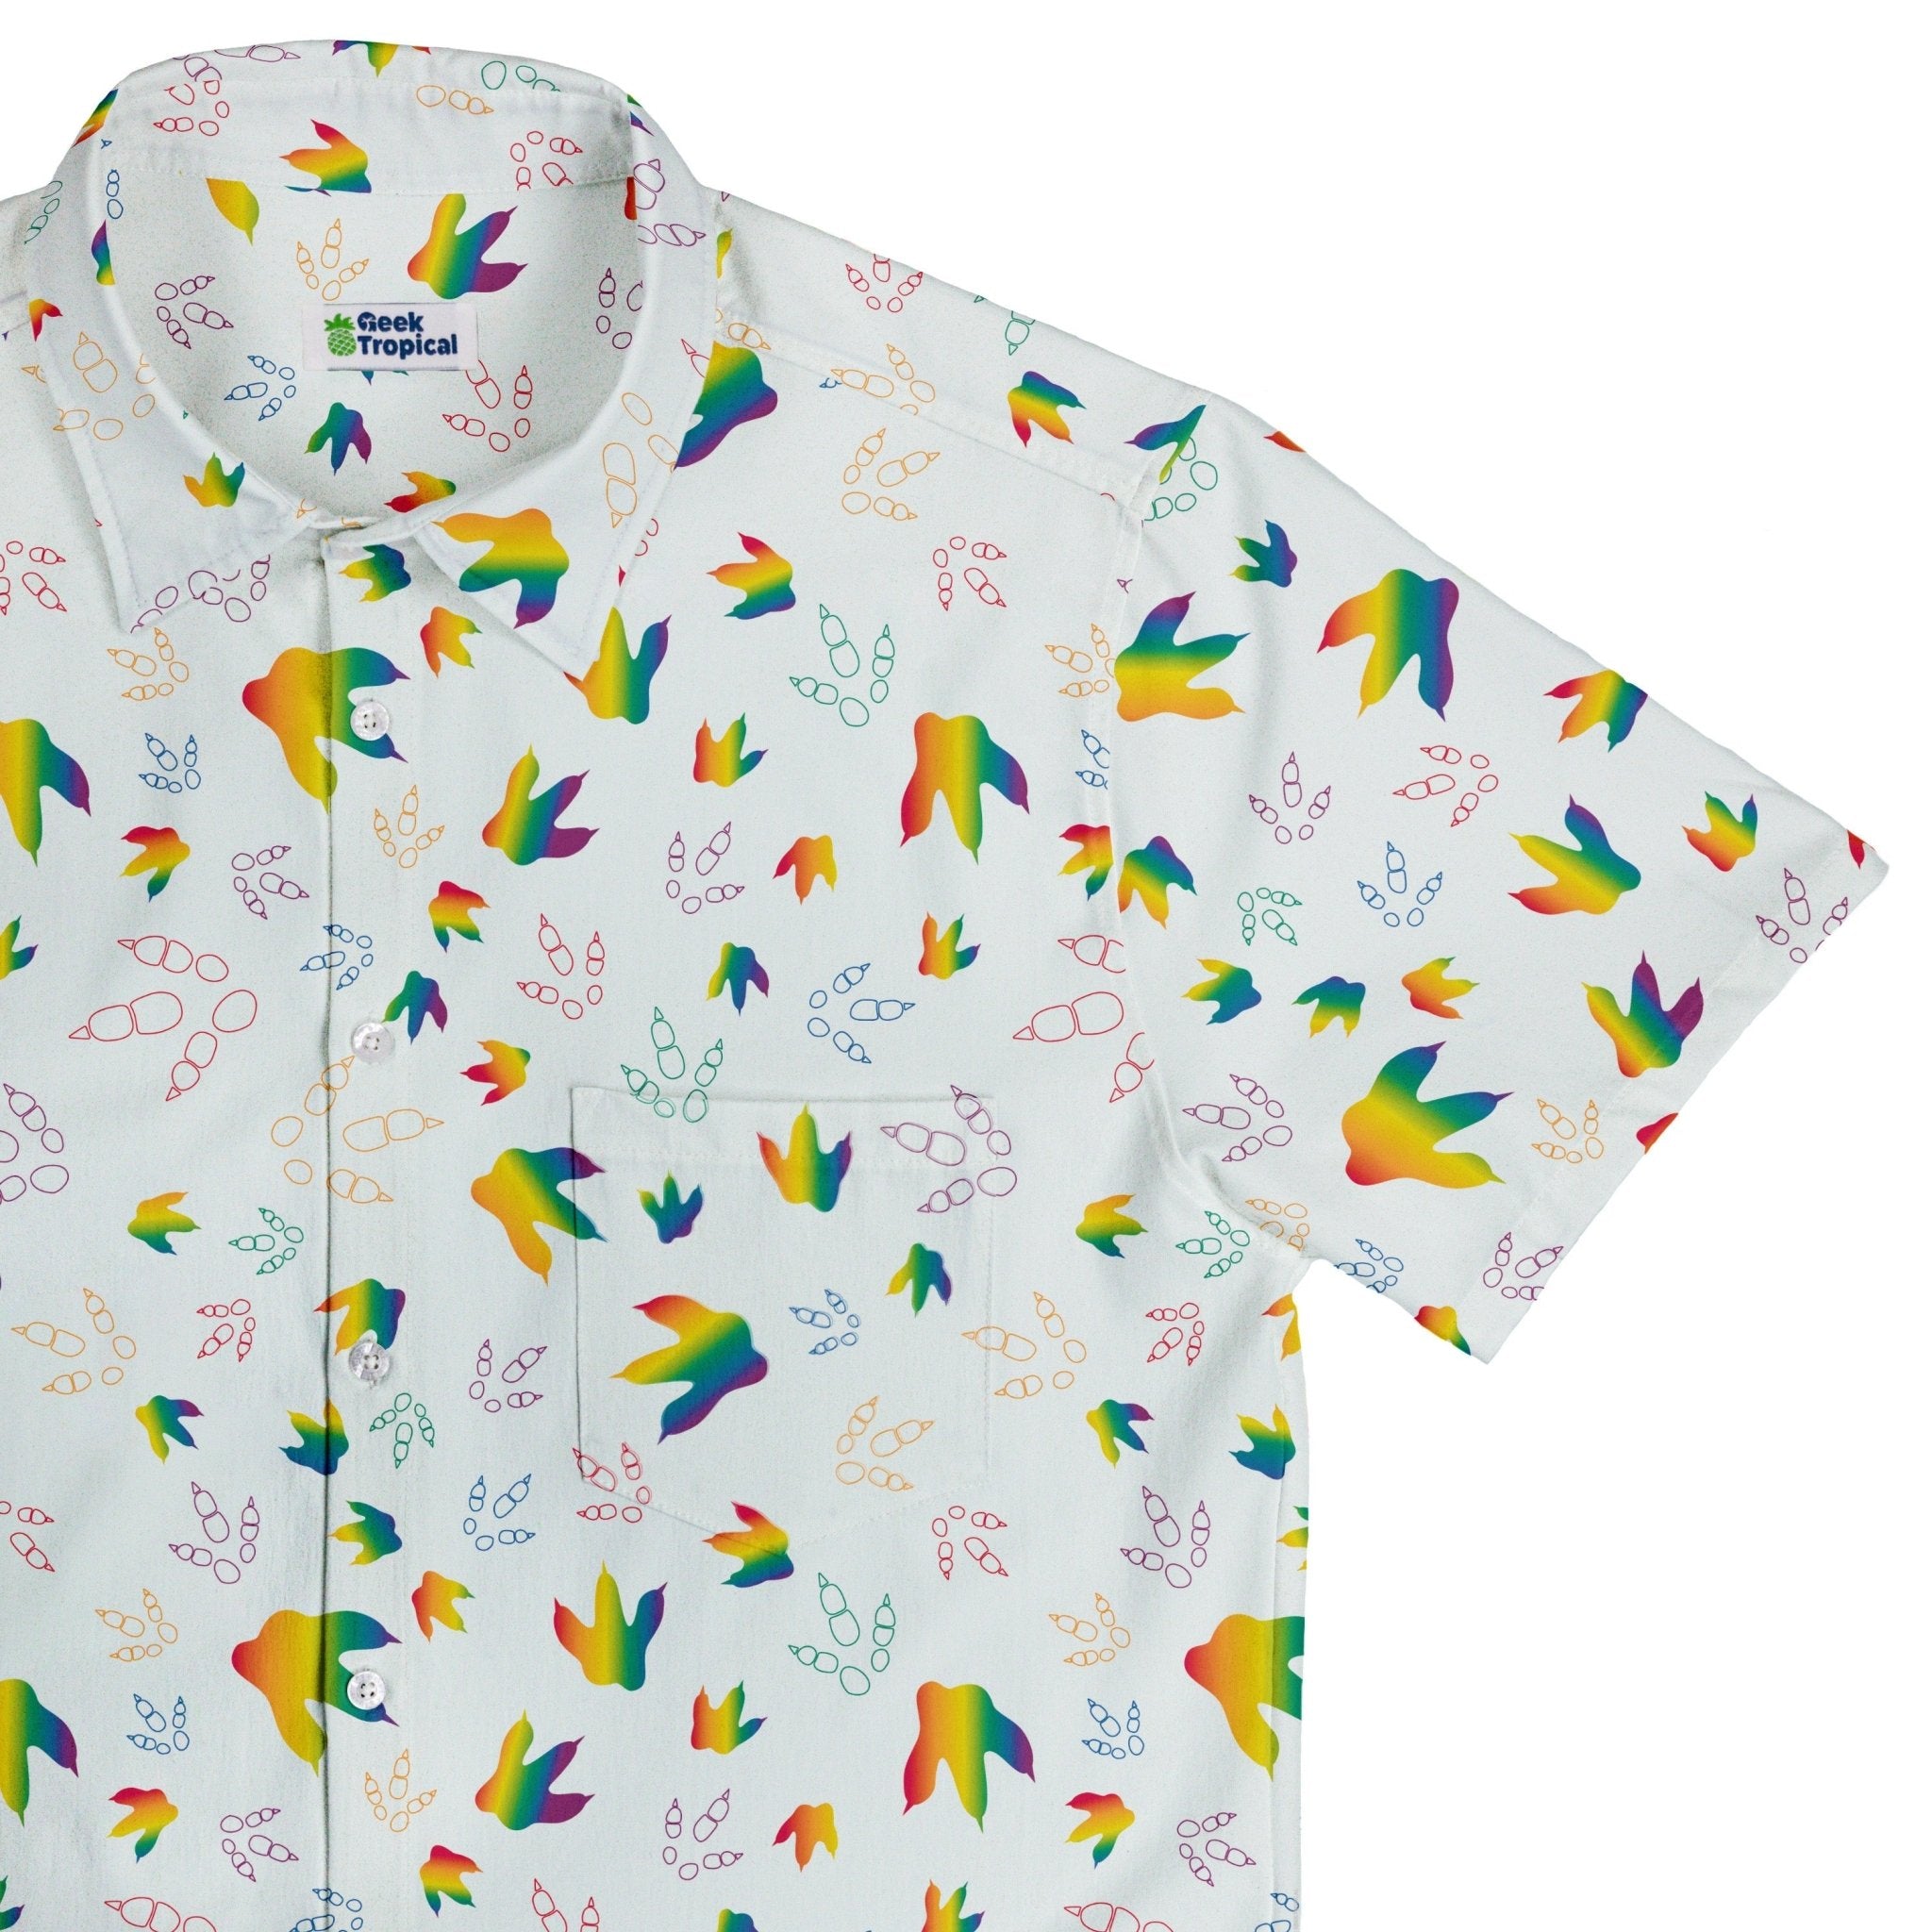 Dinosaur Footprints Rainbow Button Up Shirt - adult sizing - dinosaur print - Pride Patterns